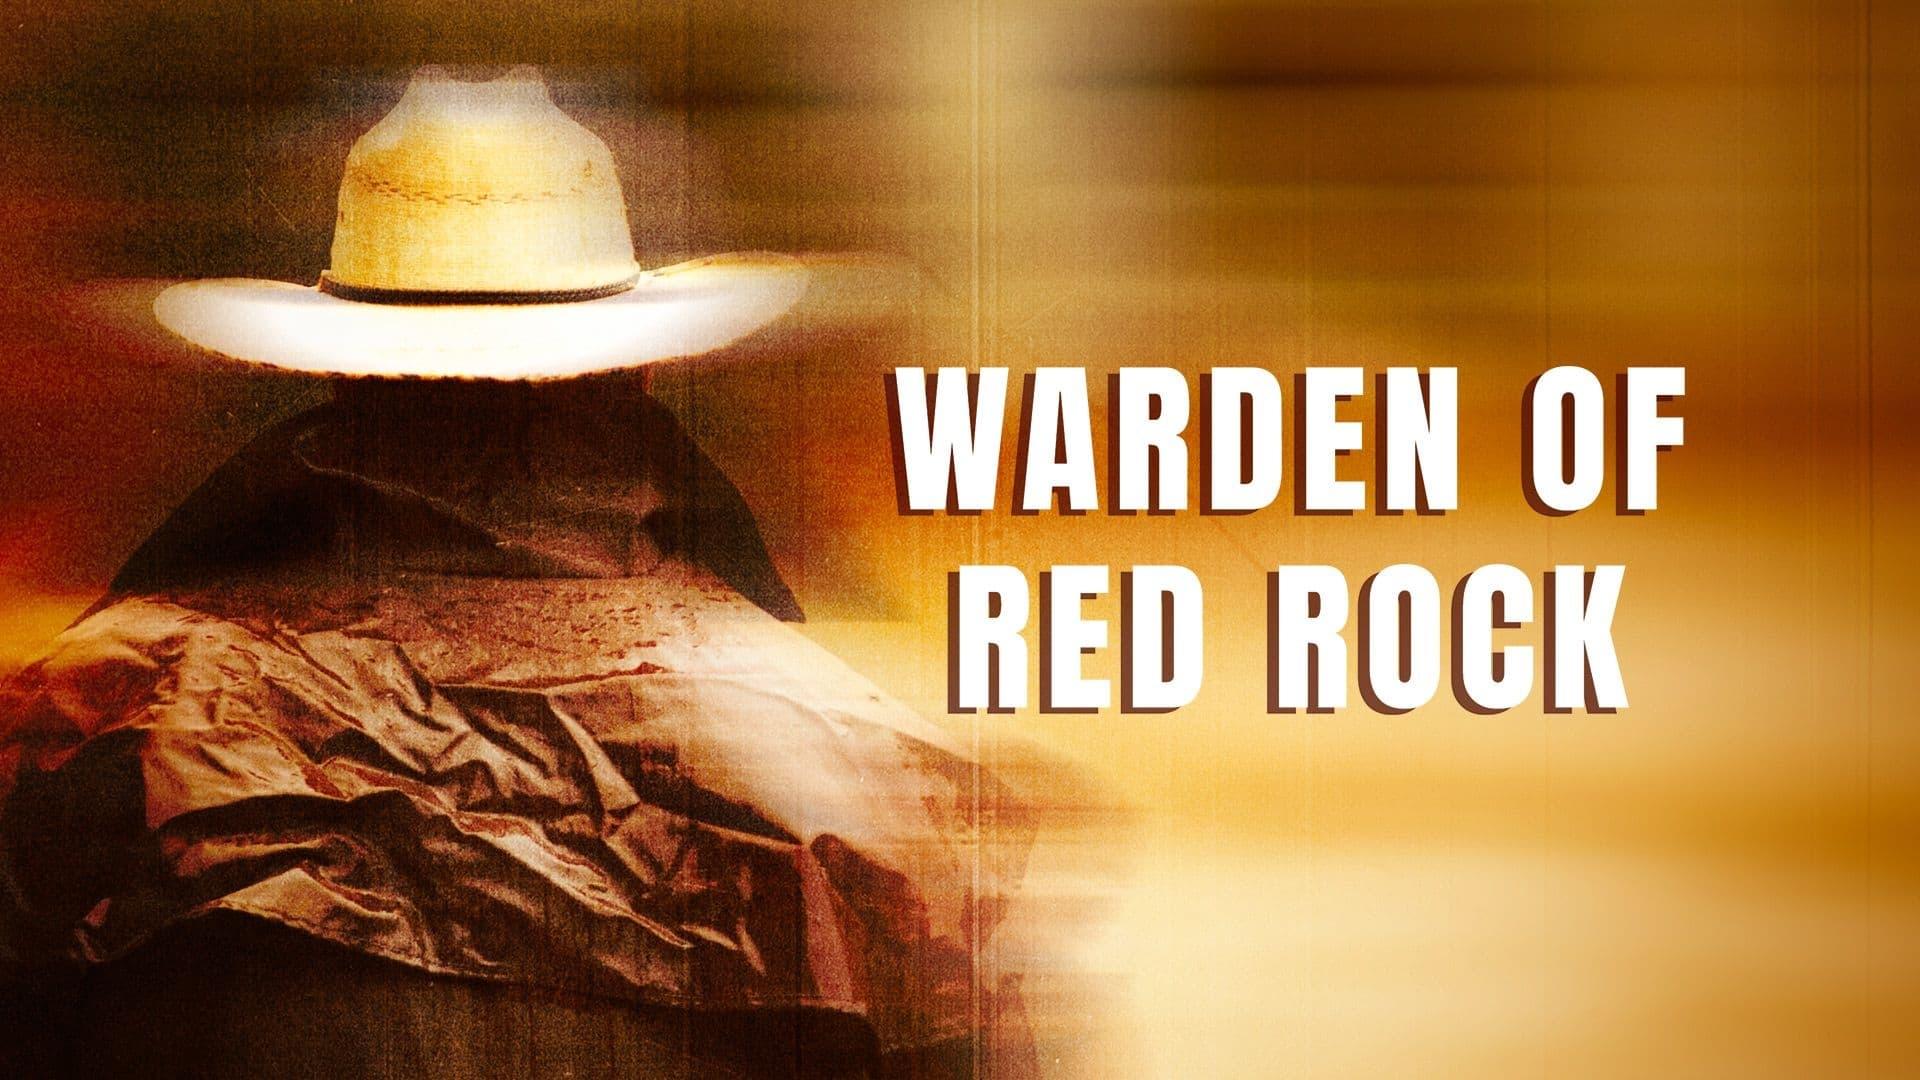 Warden of Red Rock backdrop